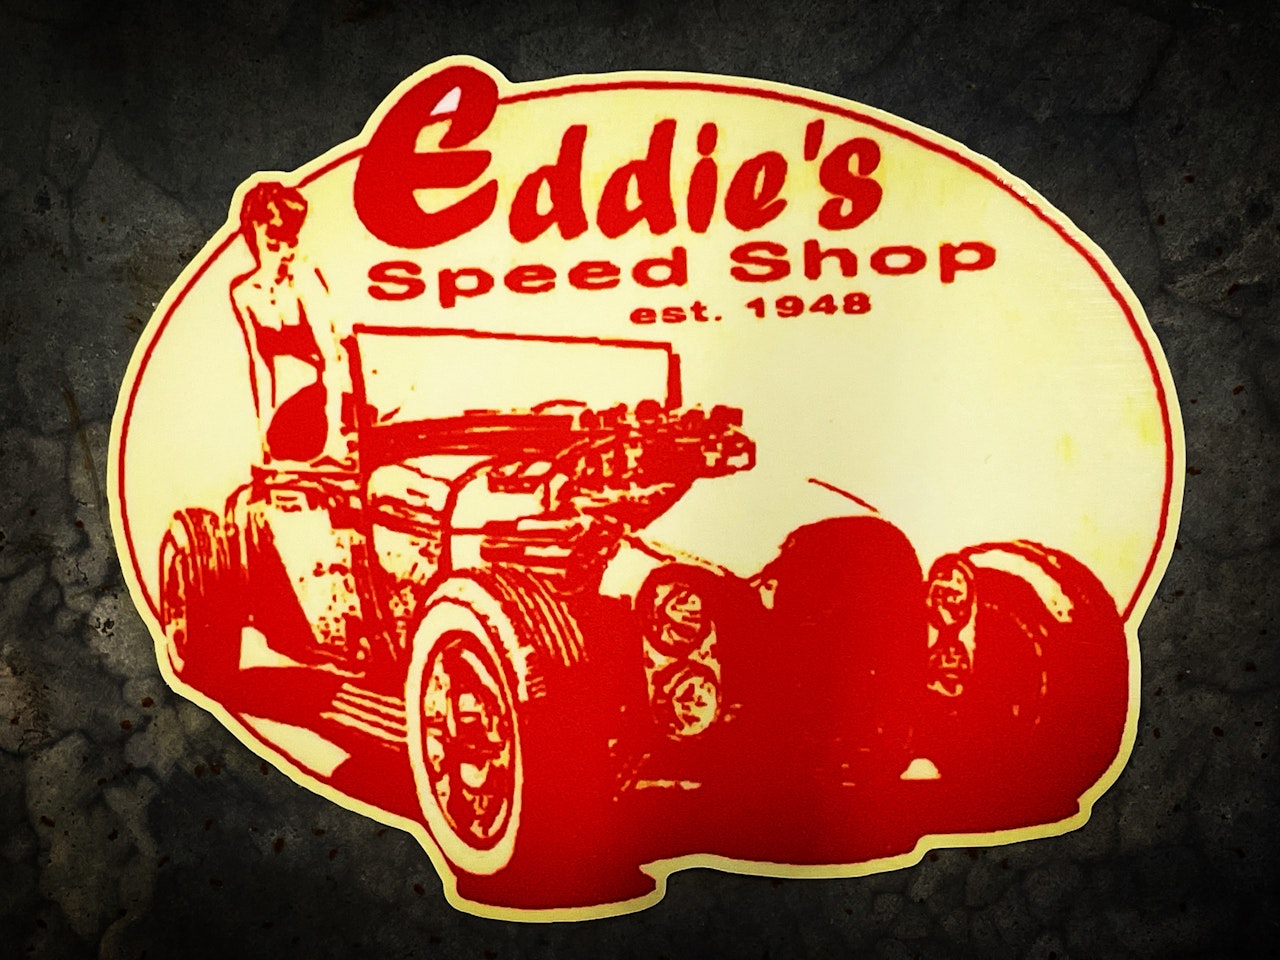 Eddies Speed Shop Dekal